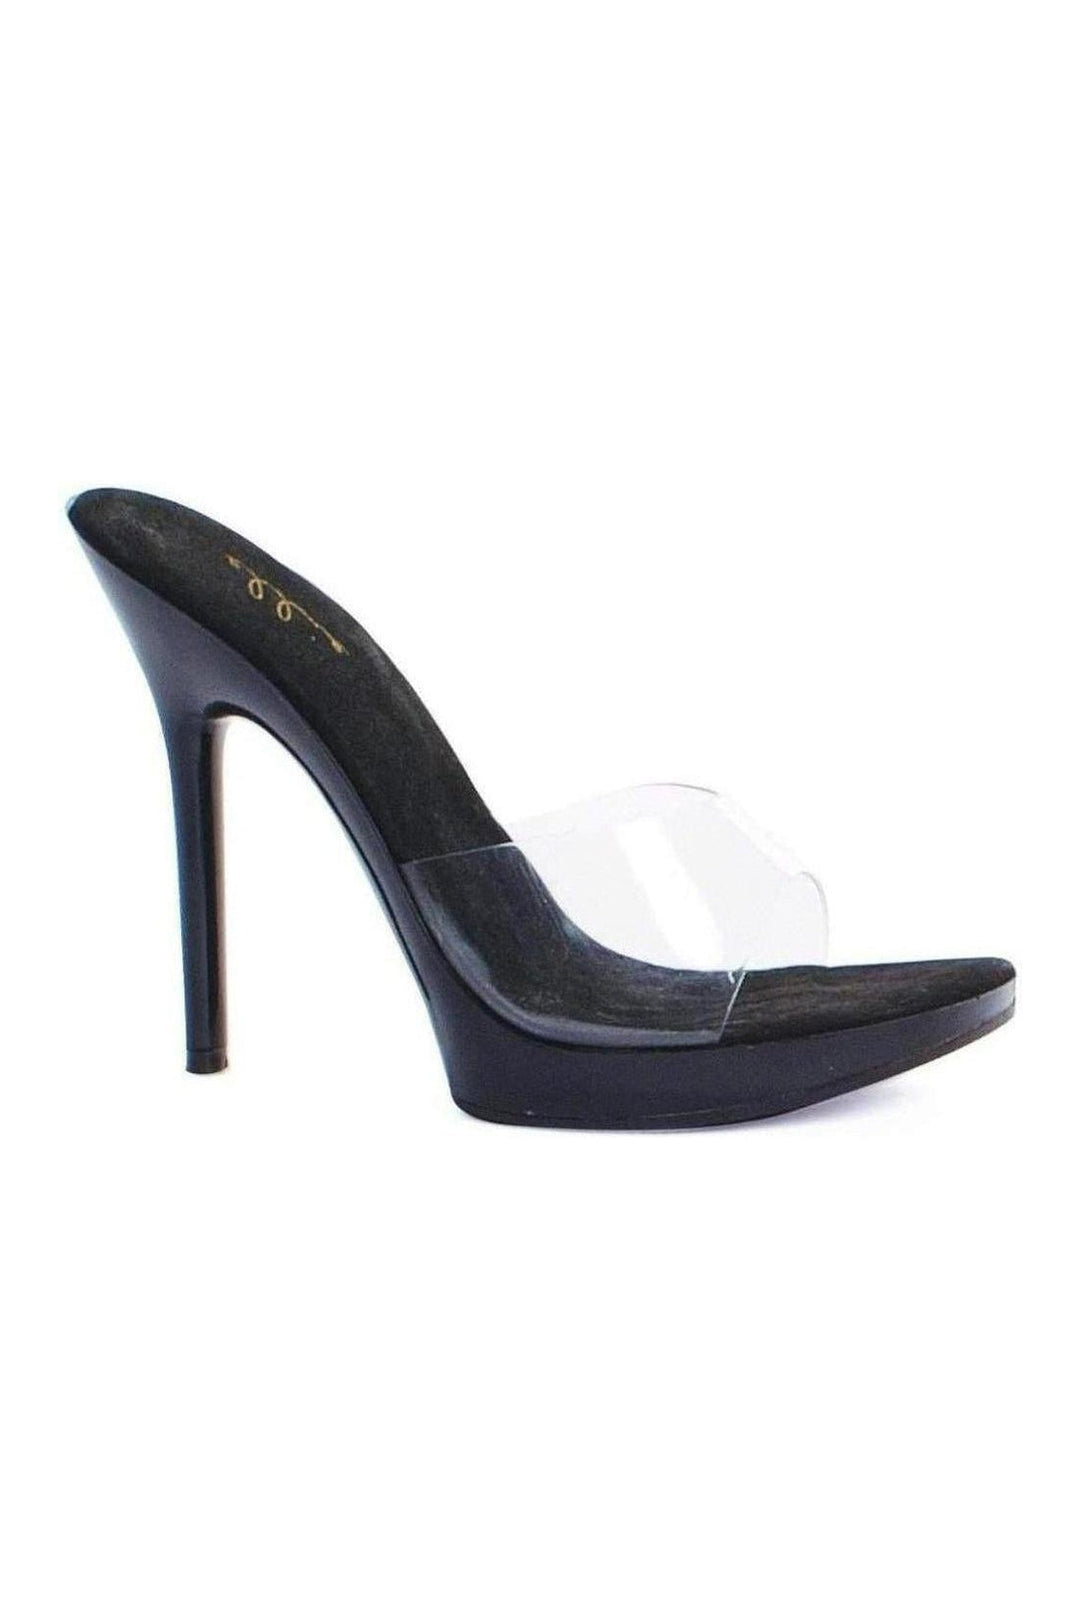 502-VANITY Slide | Clear Vinyl-Ellie Shoes-Clear-Slides-SEXYSHOES.COM